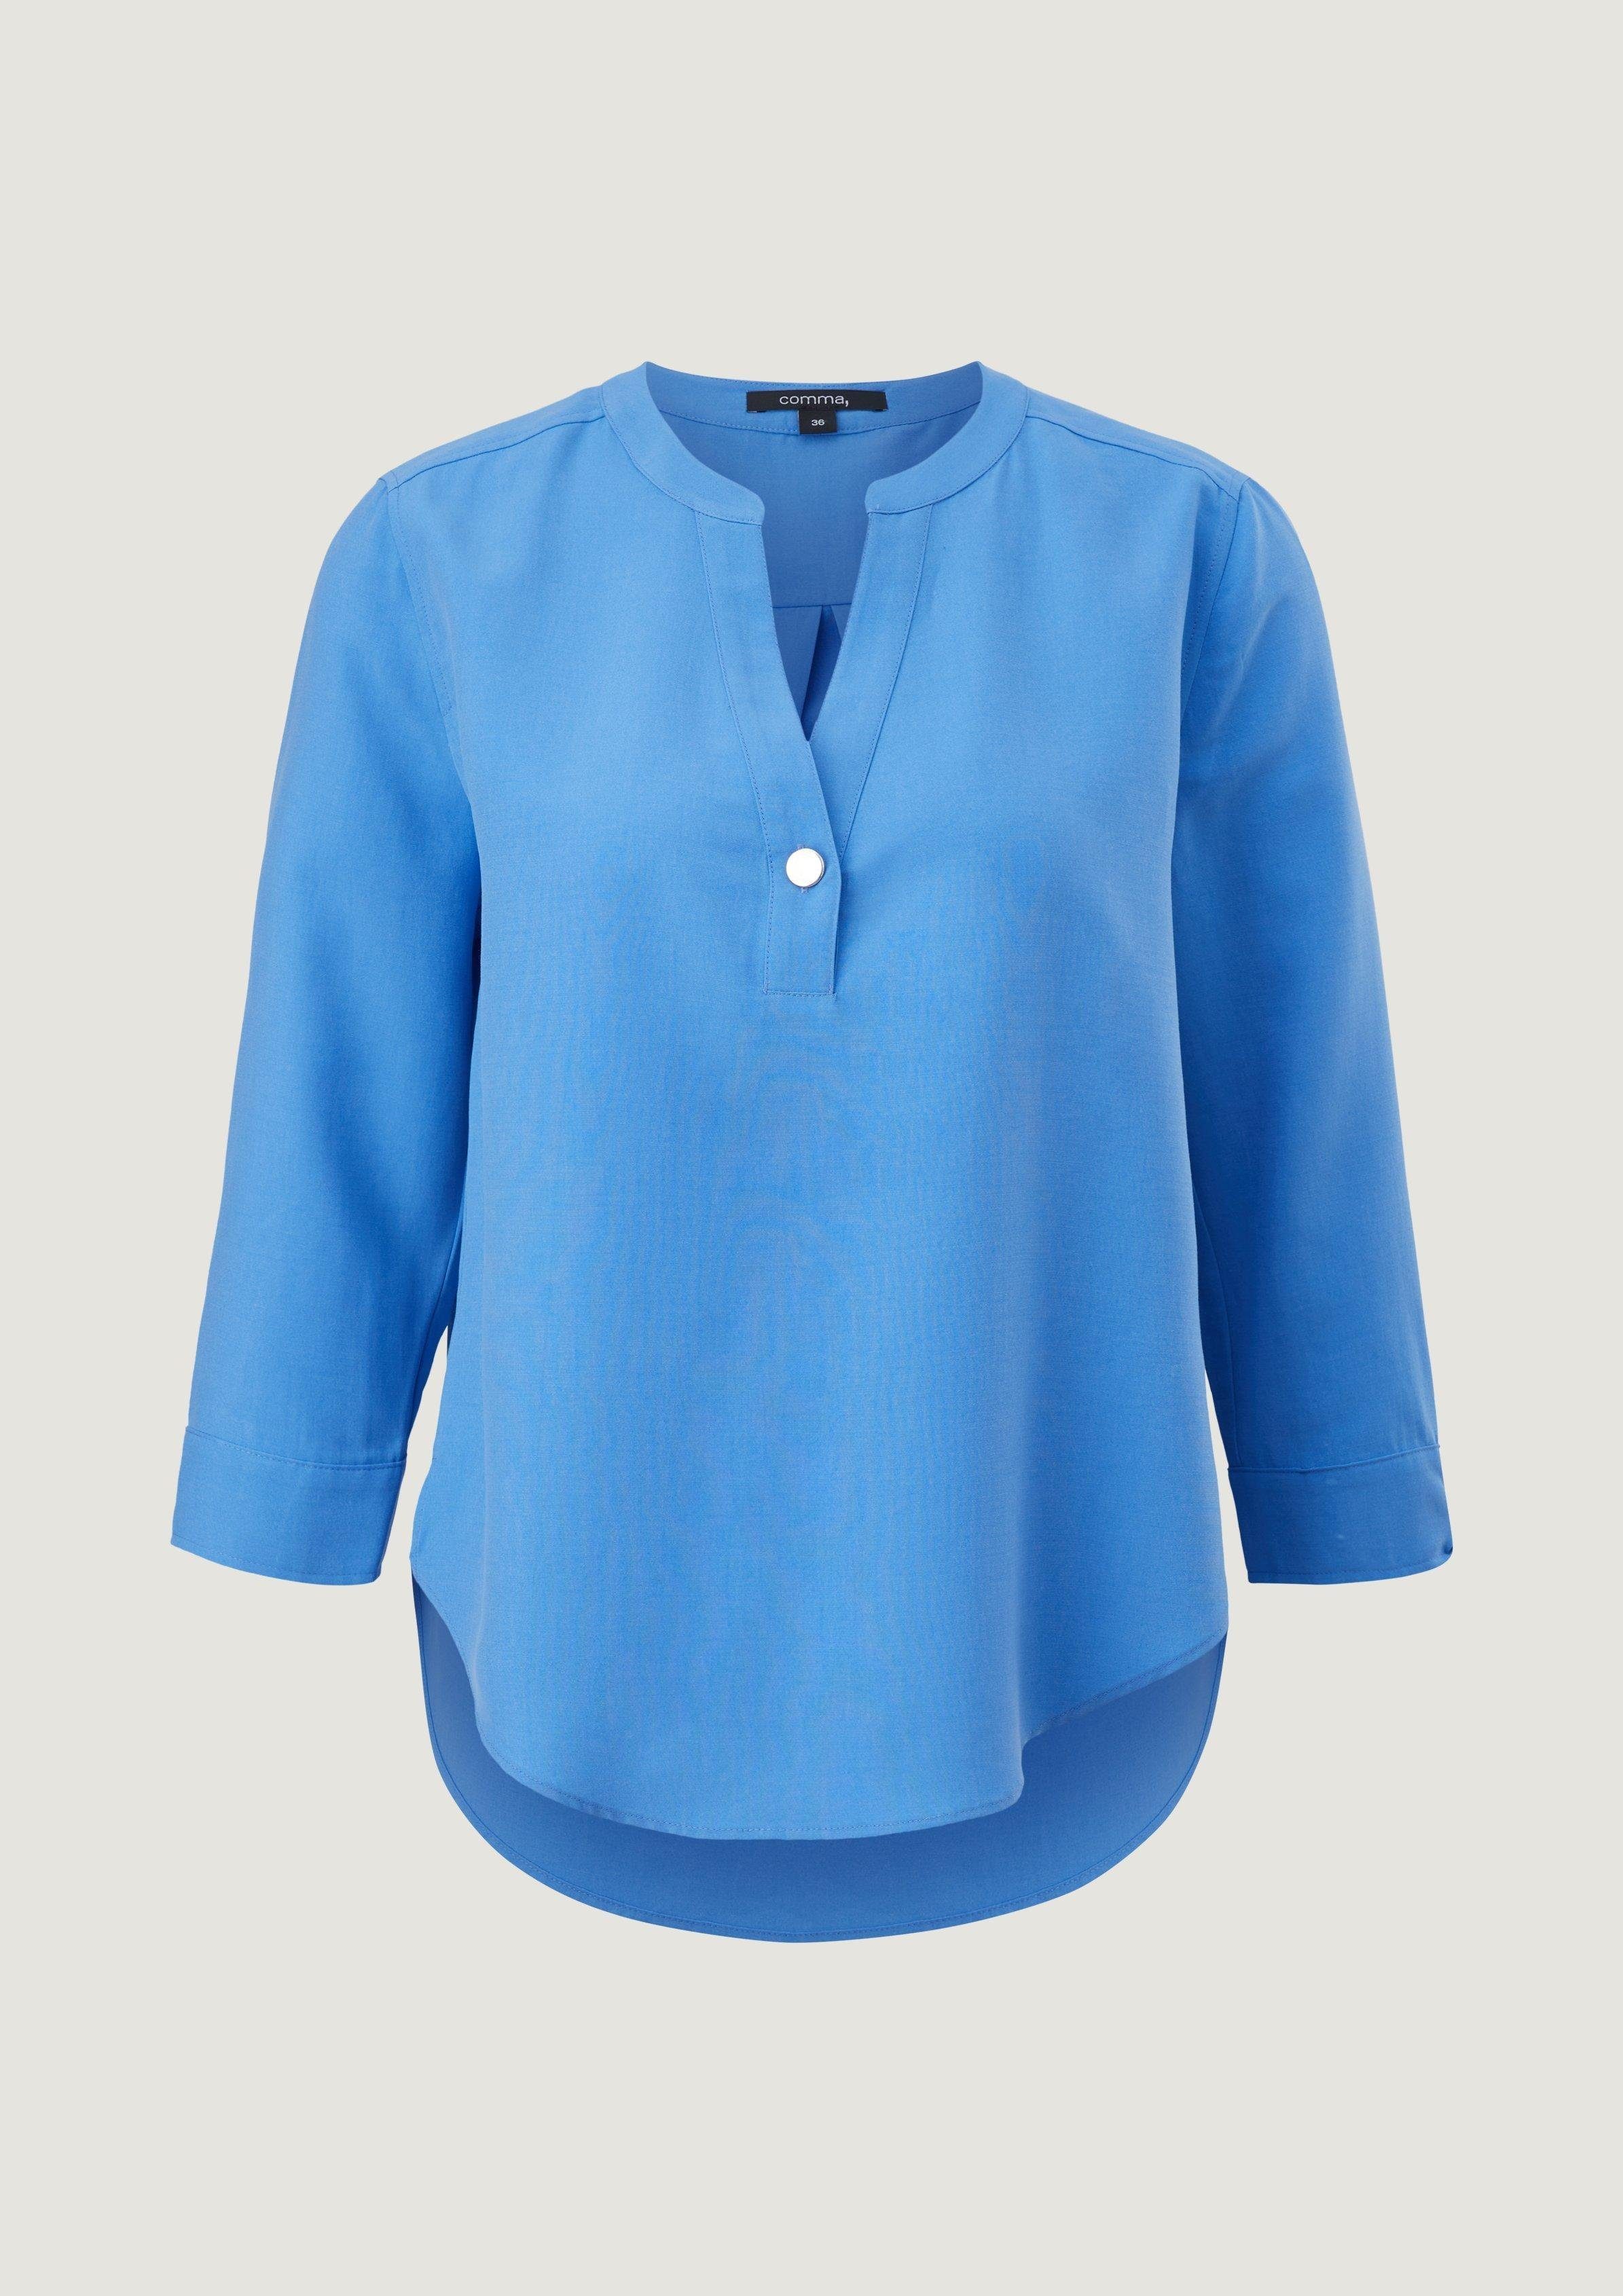 Comma aquarell Tunikaausschnitt blue 3/4-Arm-Shirt Bluse mit